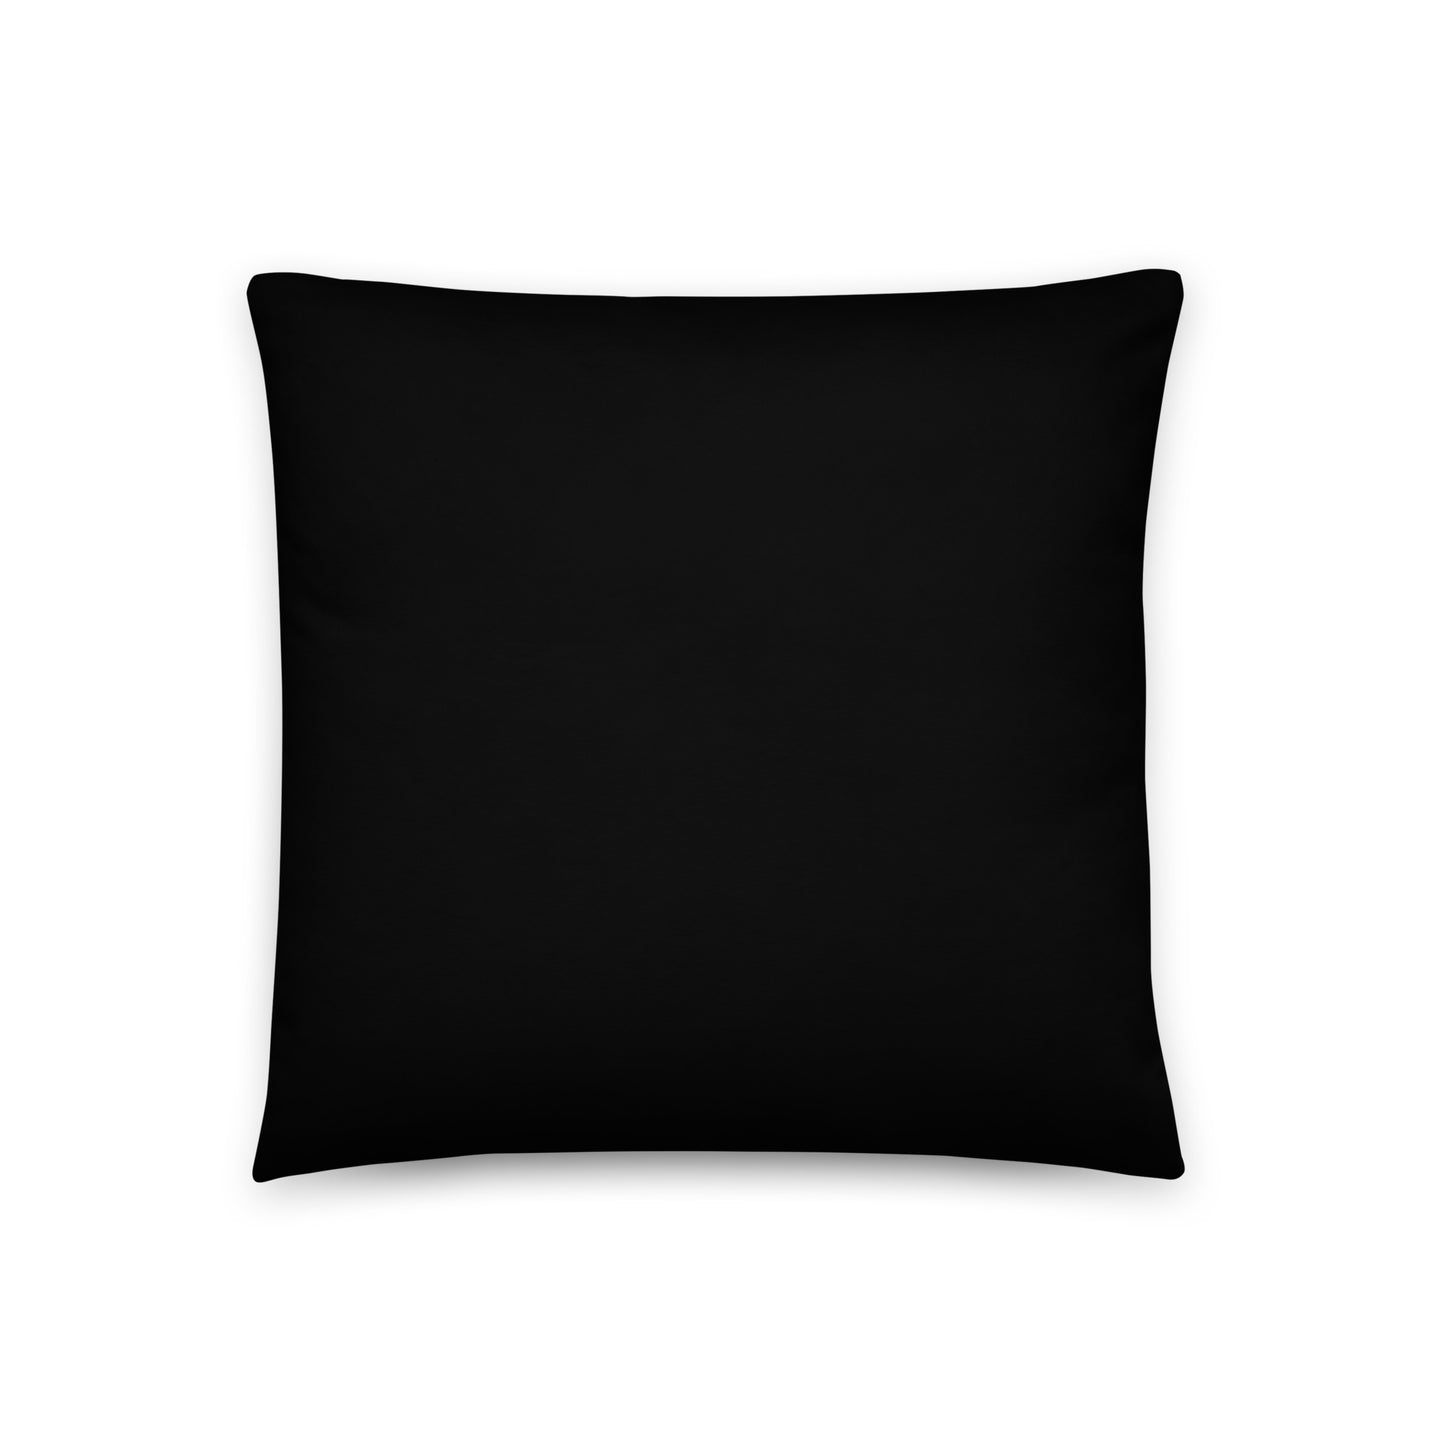 Other Half Decorative Pillow